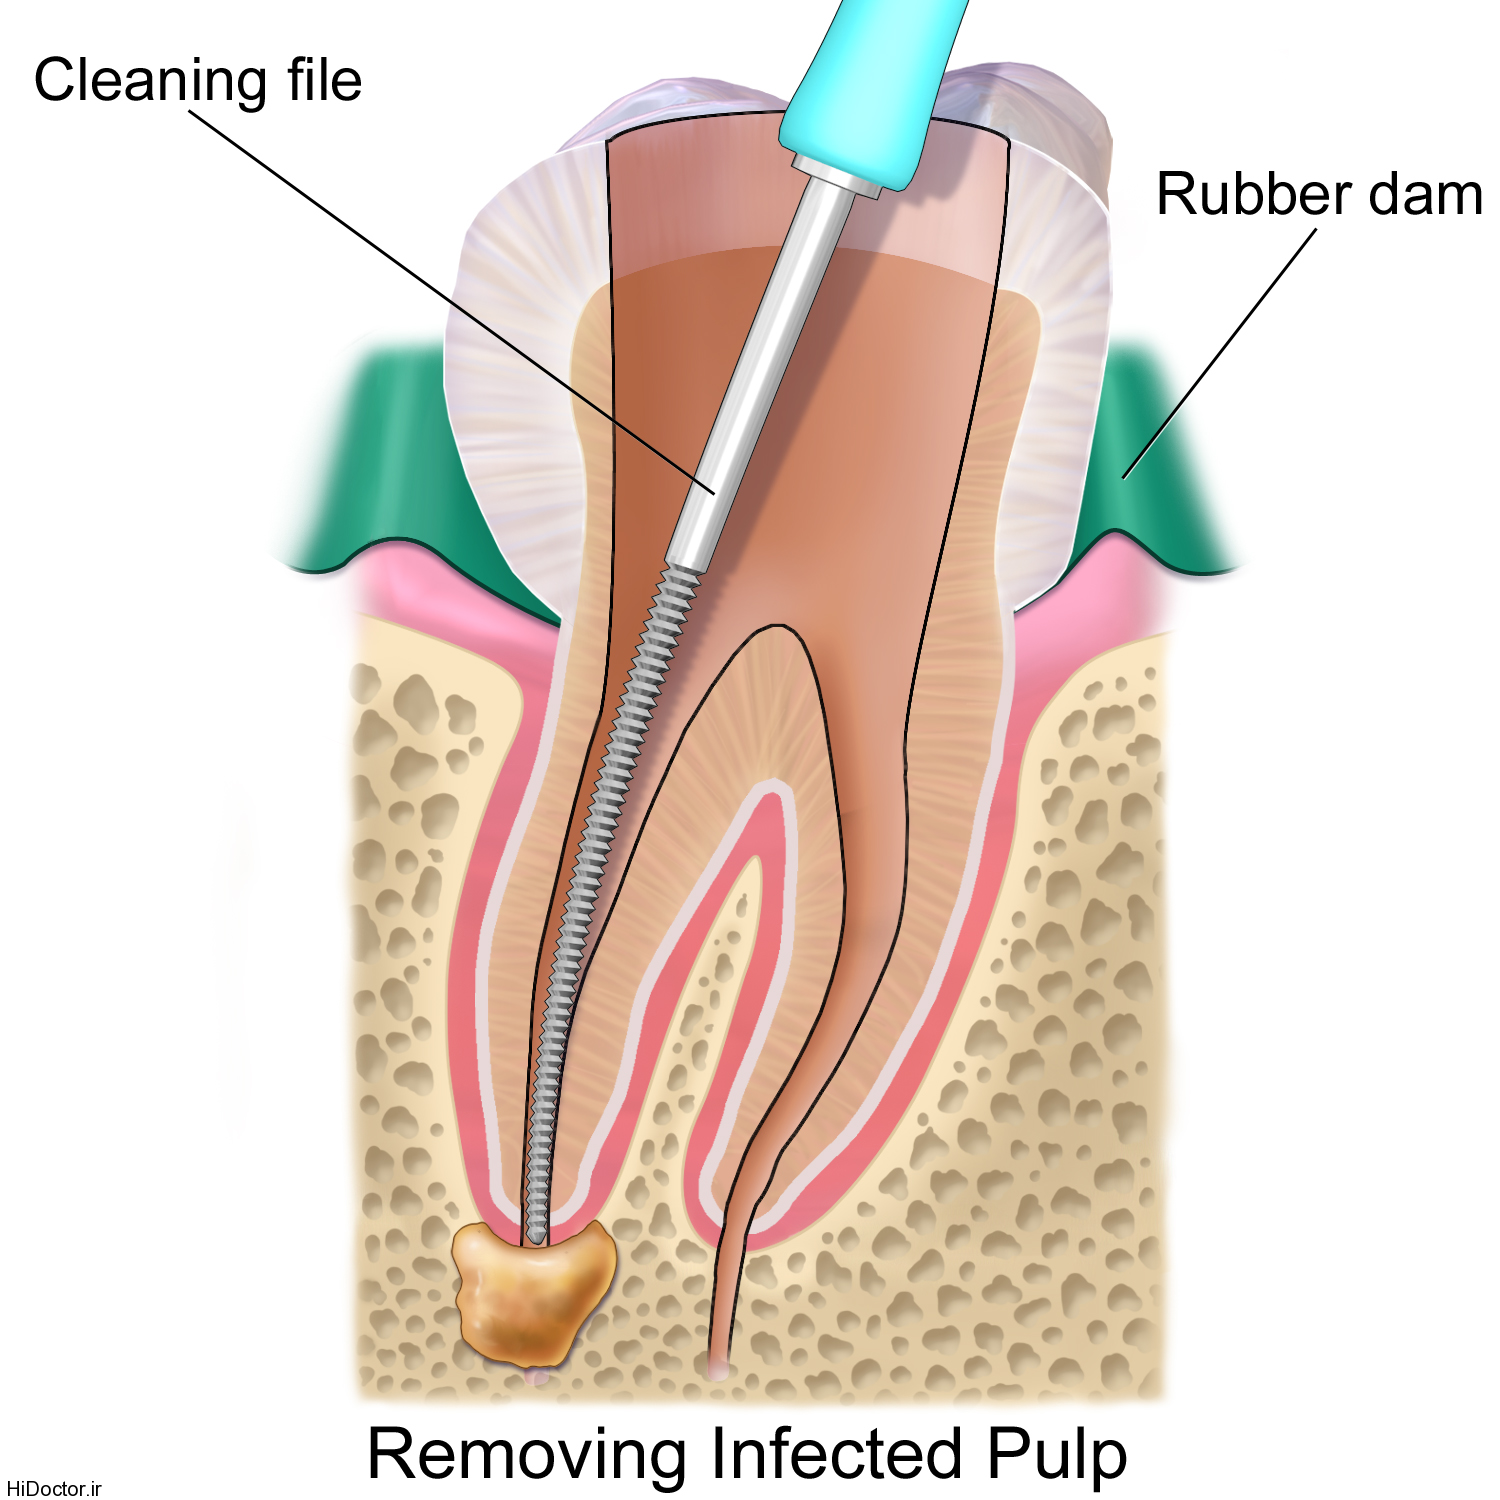 Blausen 0774 RootCanal اطلاعاتی راجع به عصب کشی دندان